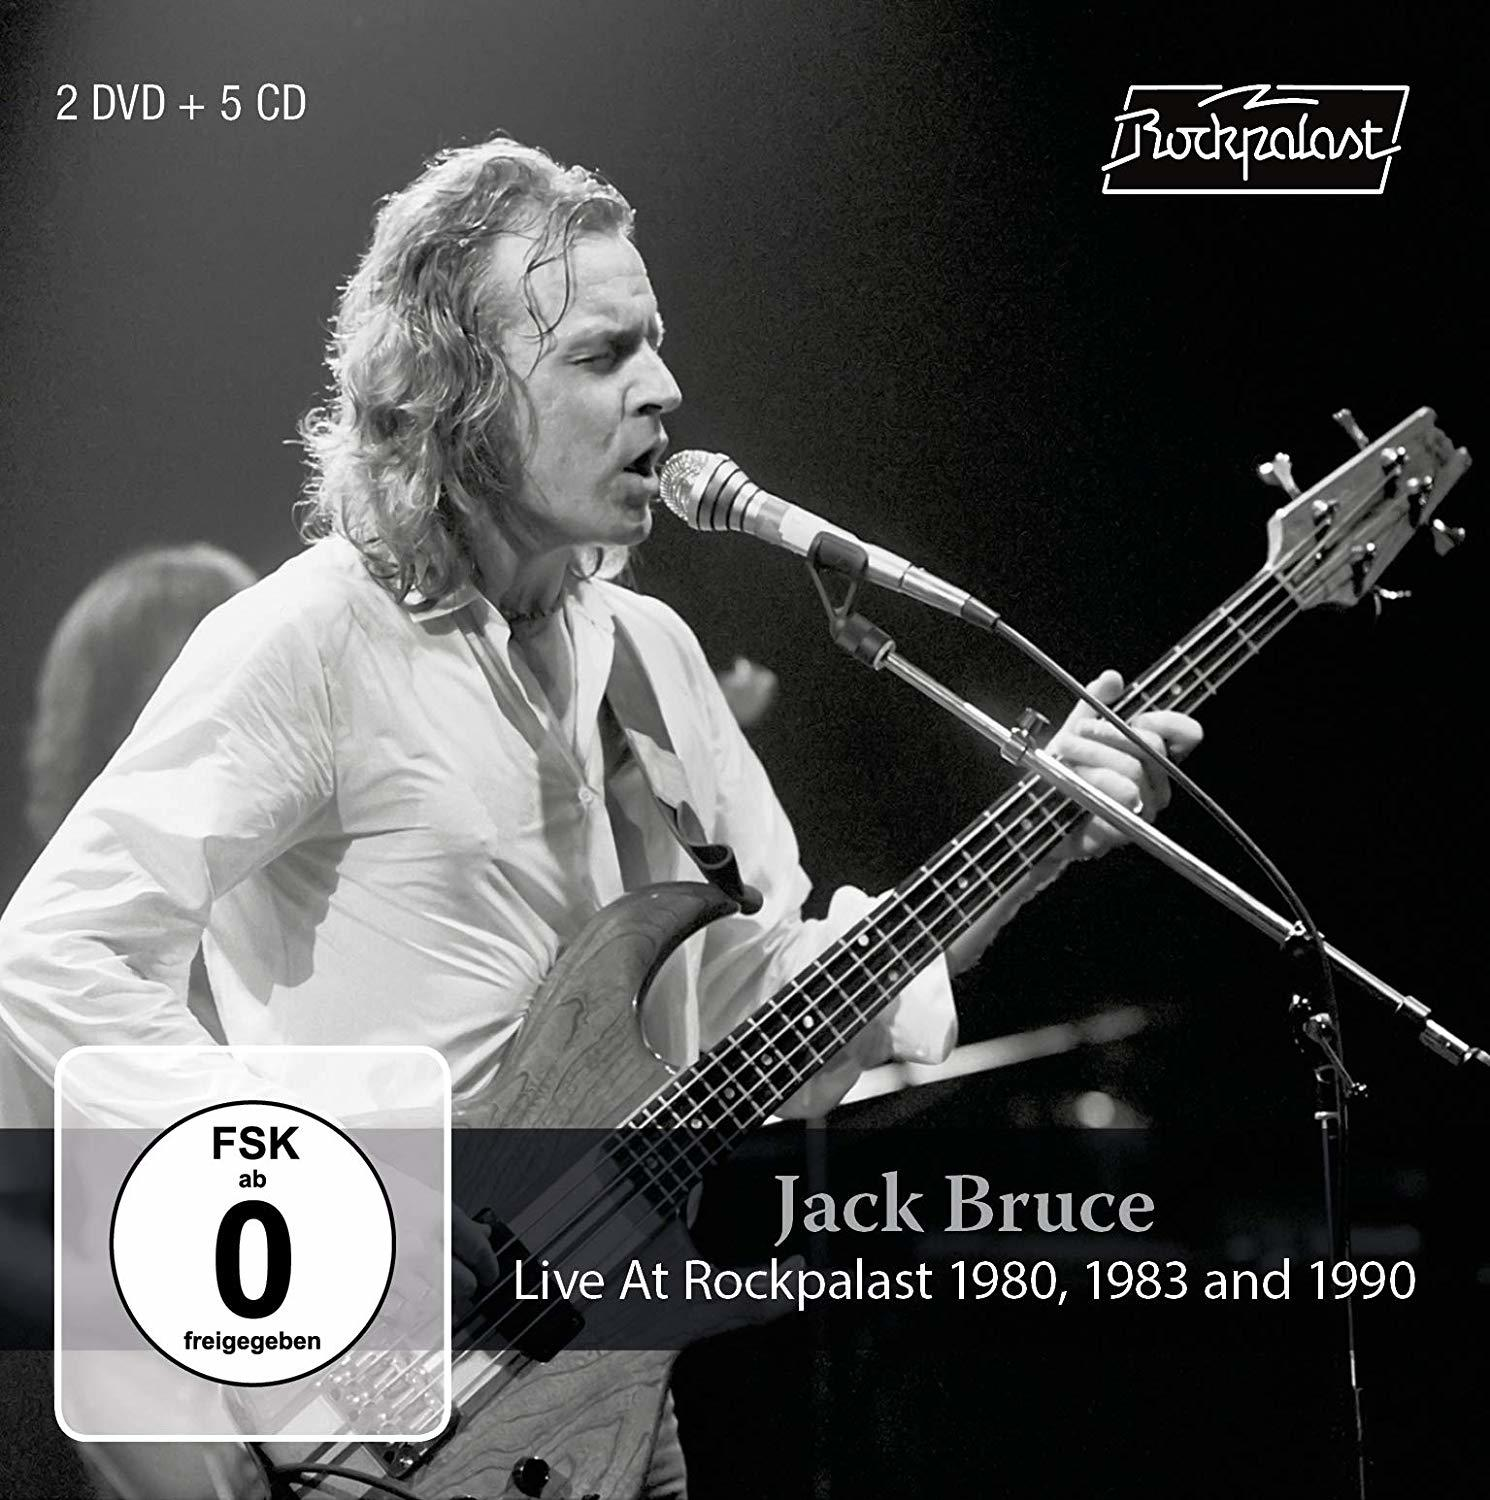 Jack Bruce - At (CD Rockpalast + Live DVD Video) 